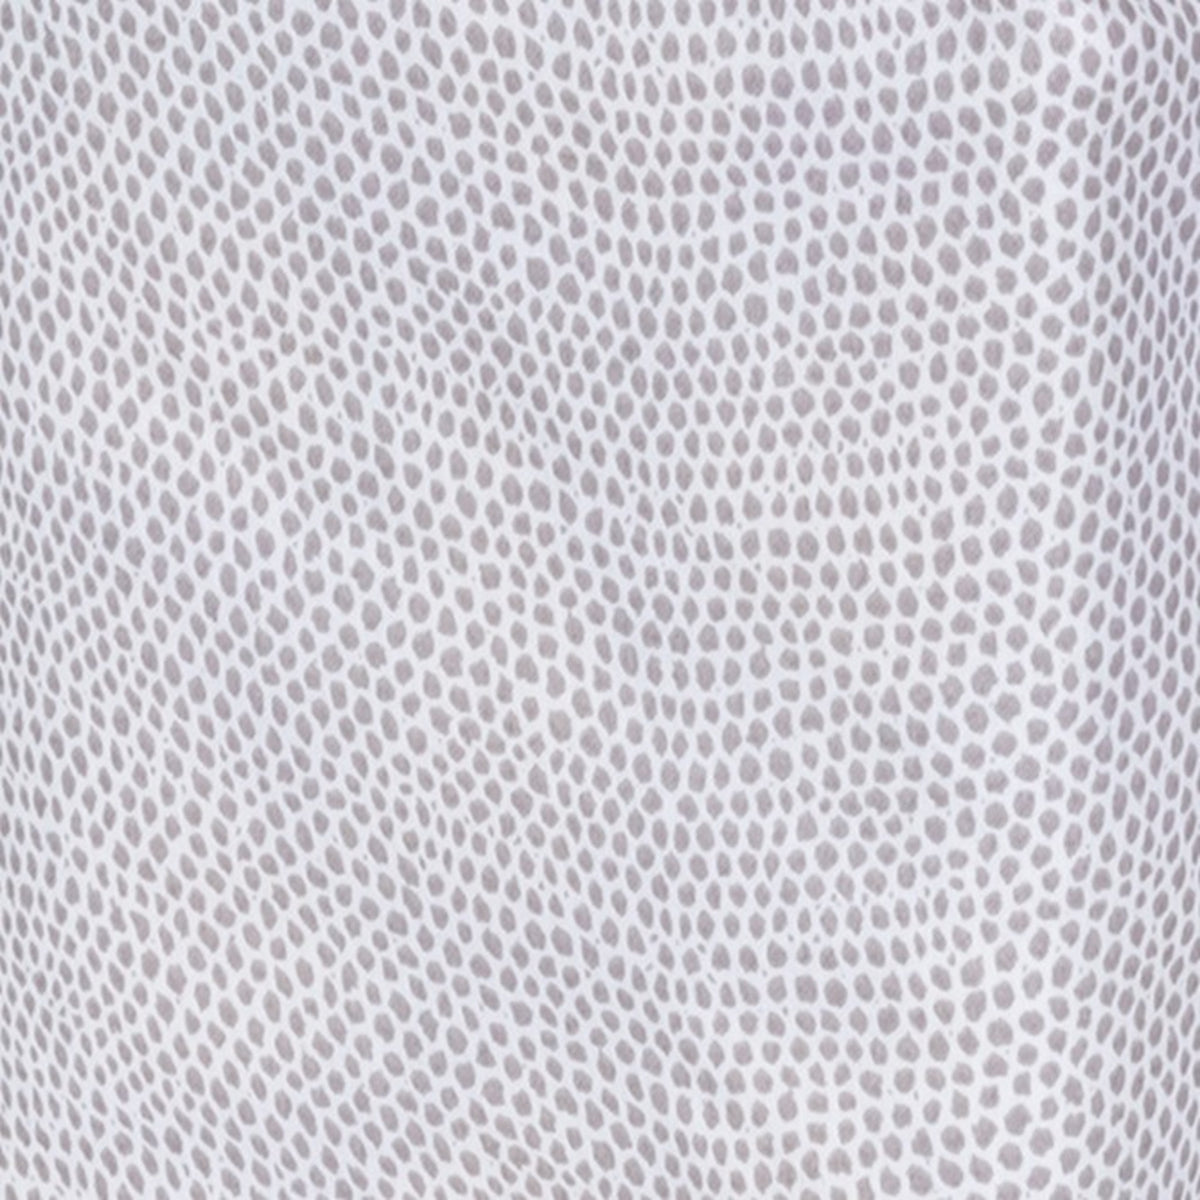 Swatch Sample of Matouk Jasper Tissue Box Cover in Fawn Color